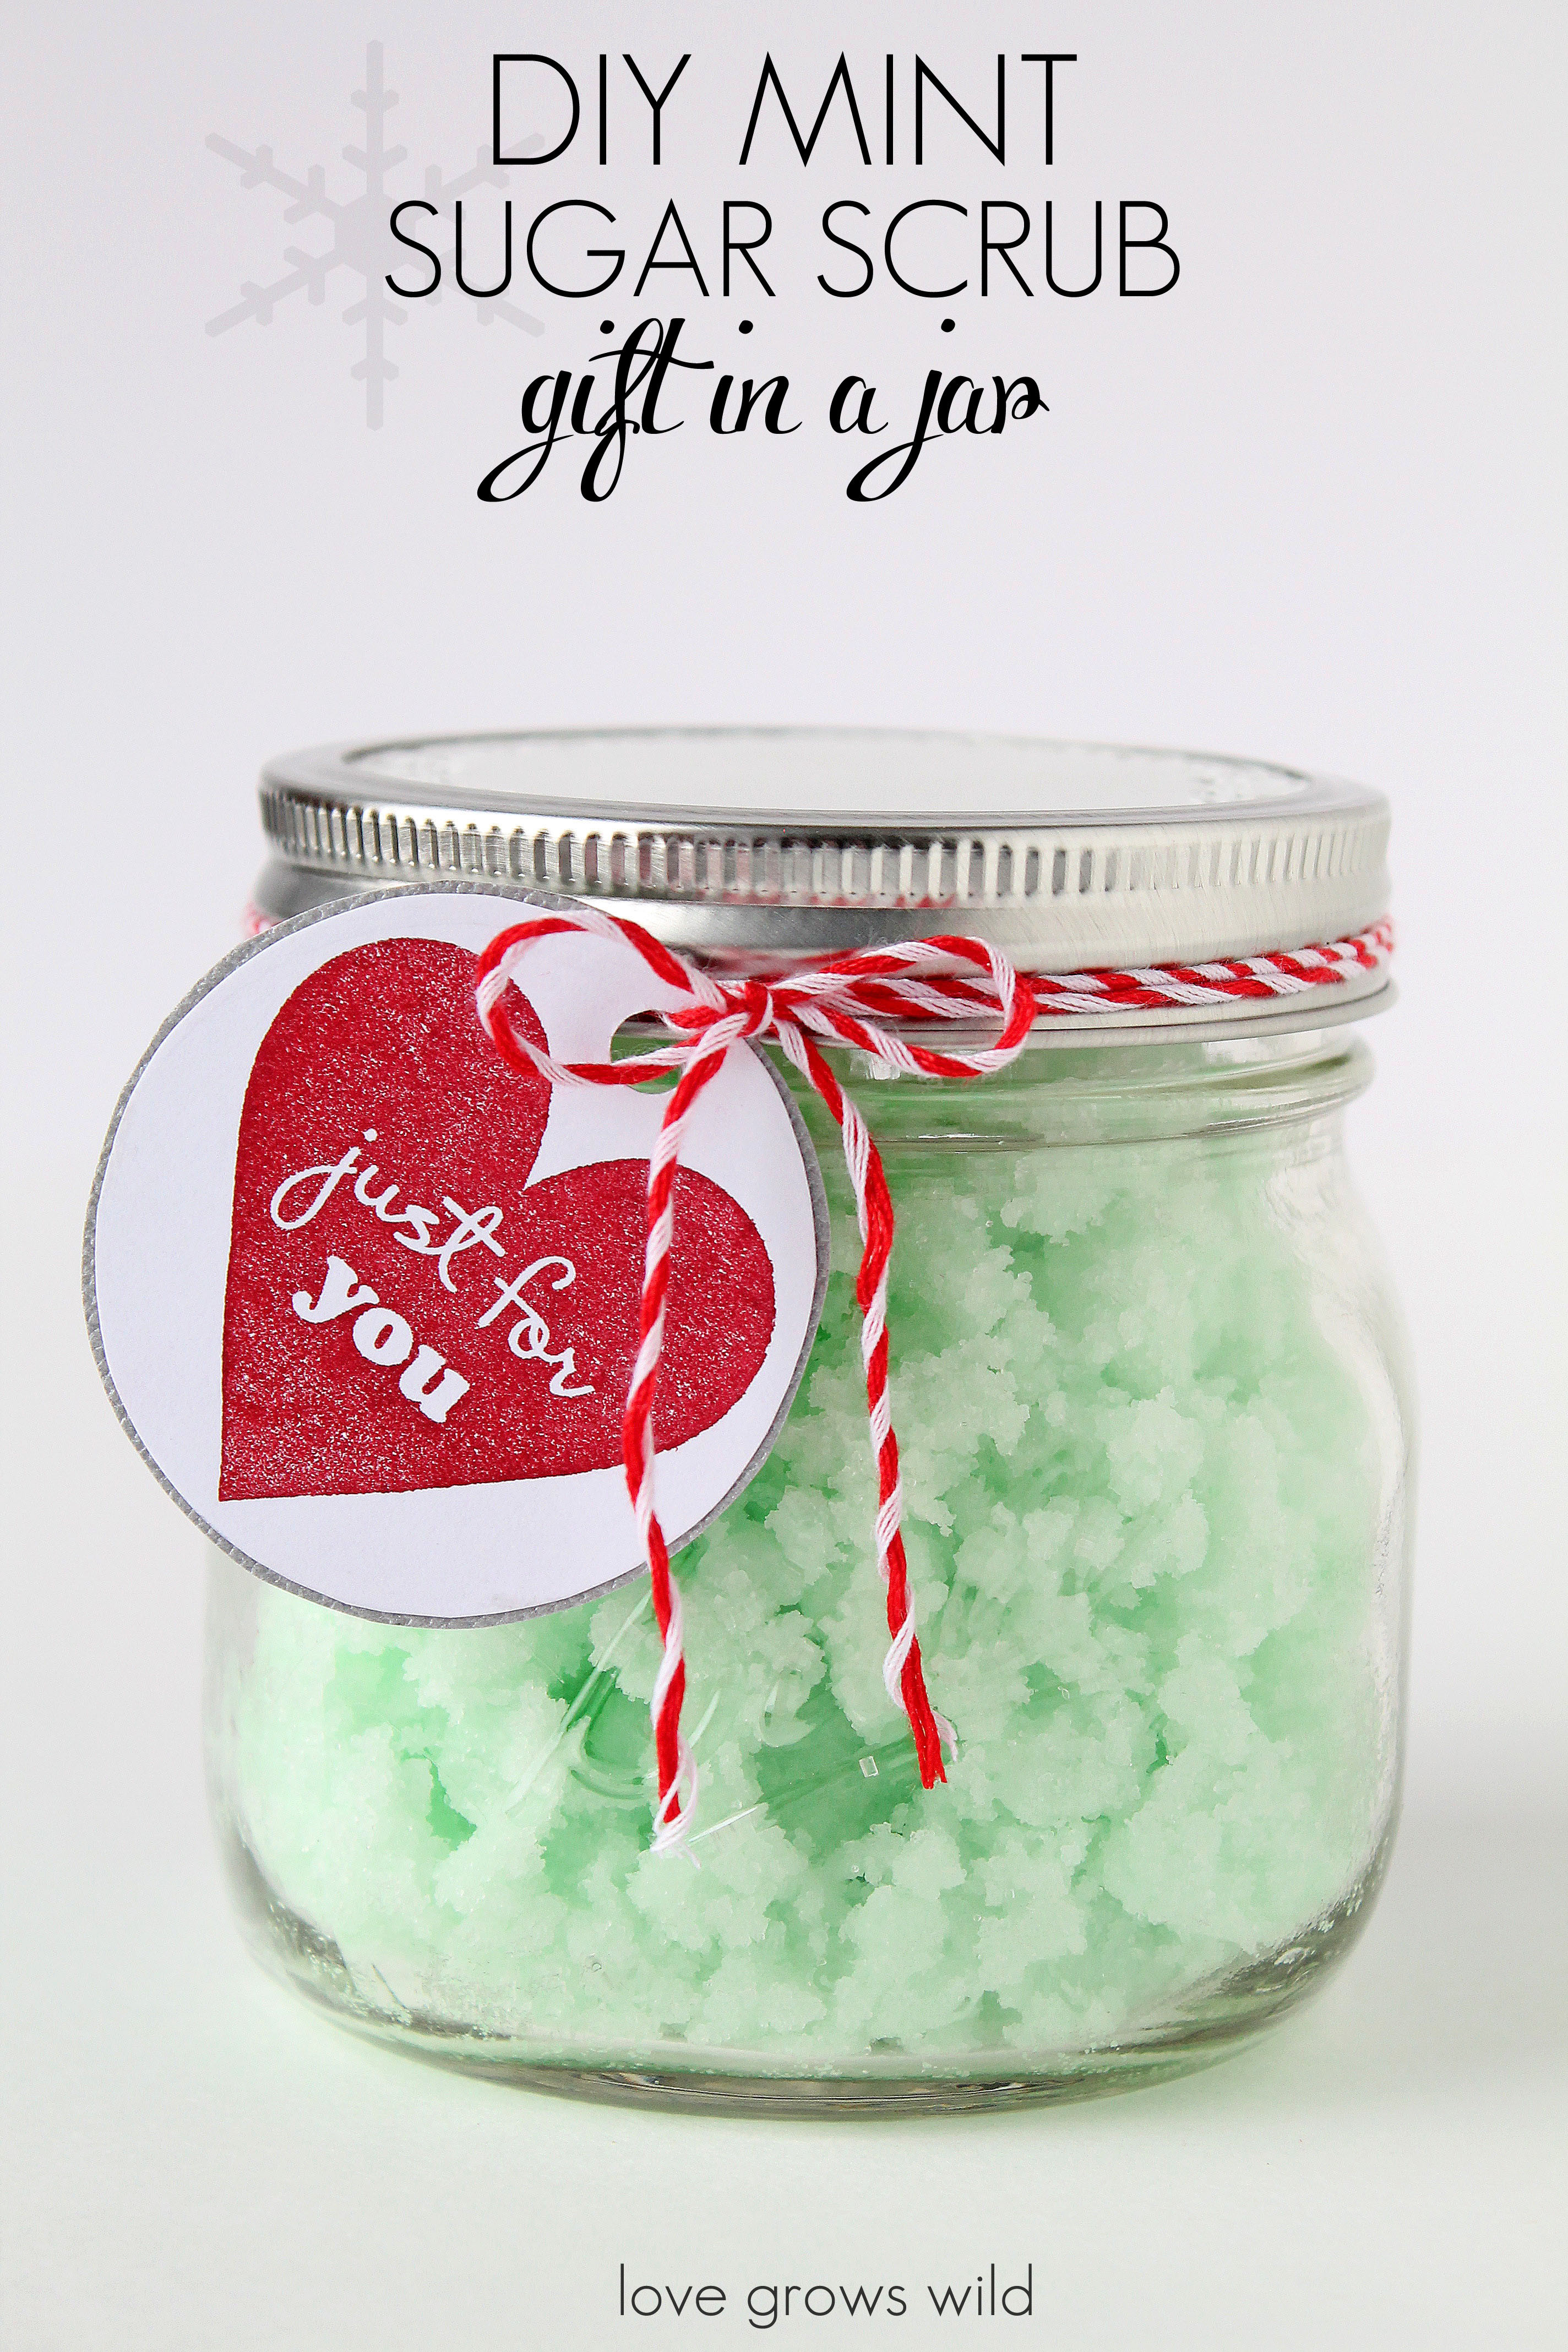 Best ideas about DIY Mason Jar Christmas Gifts
. Save or Pin 5 Fun Mason Jar Gift Ideas Love Grows Wild Now.